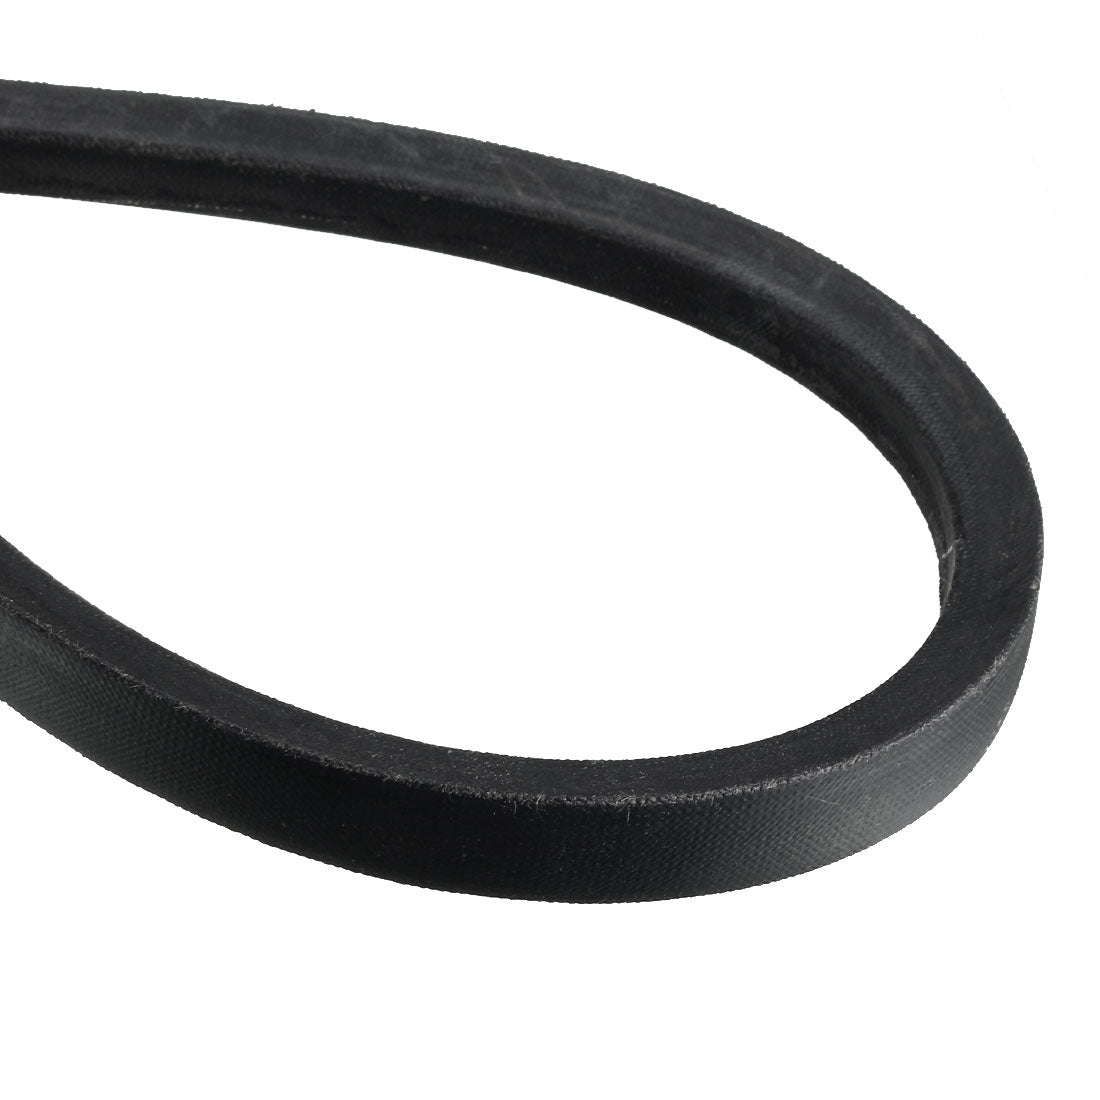 uxcell Uxcell B51 V-Belts 51" Pitch Length, B-Section Rubber Drive Belt 2pcs